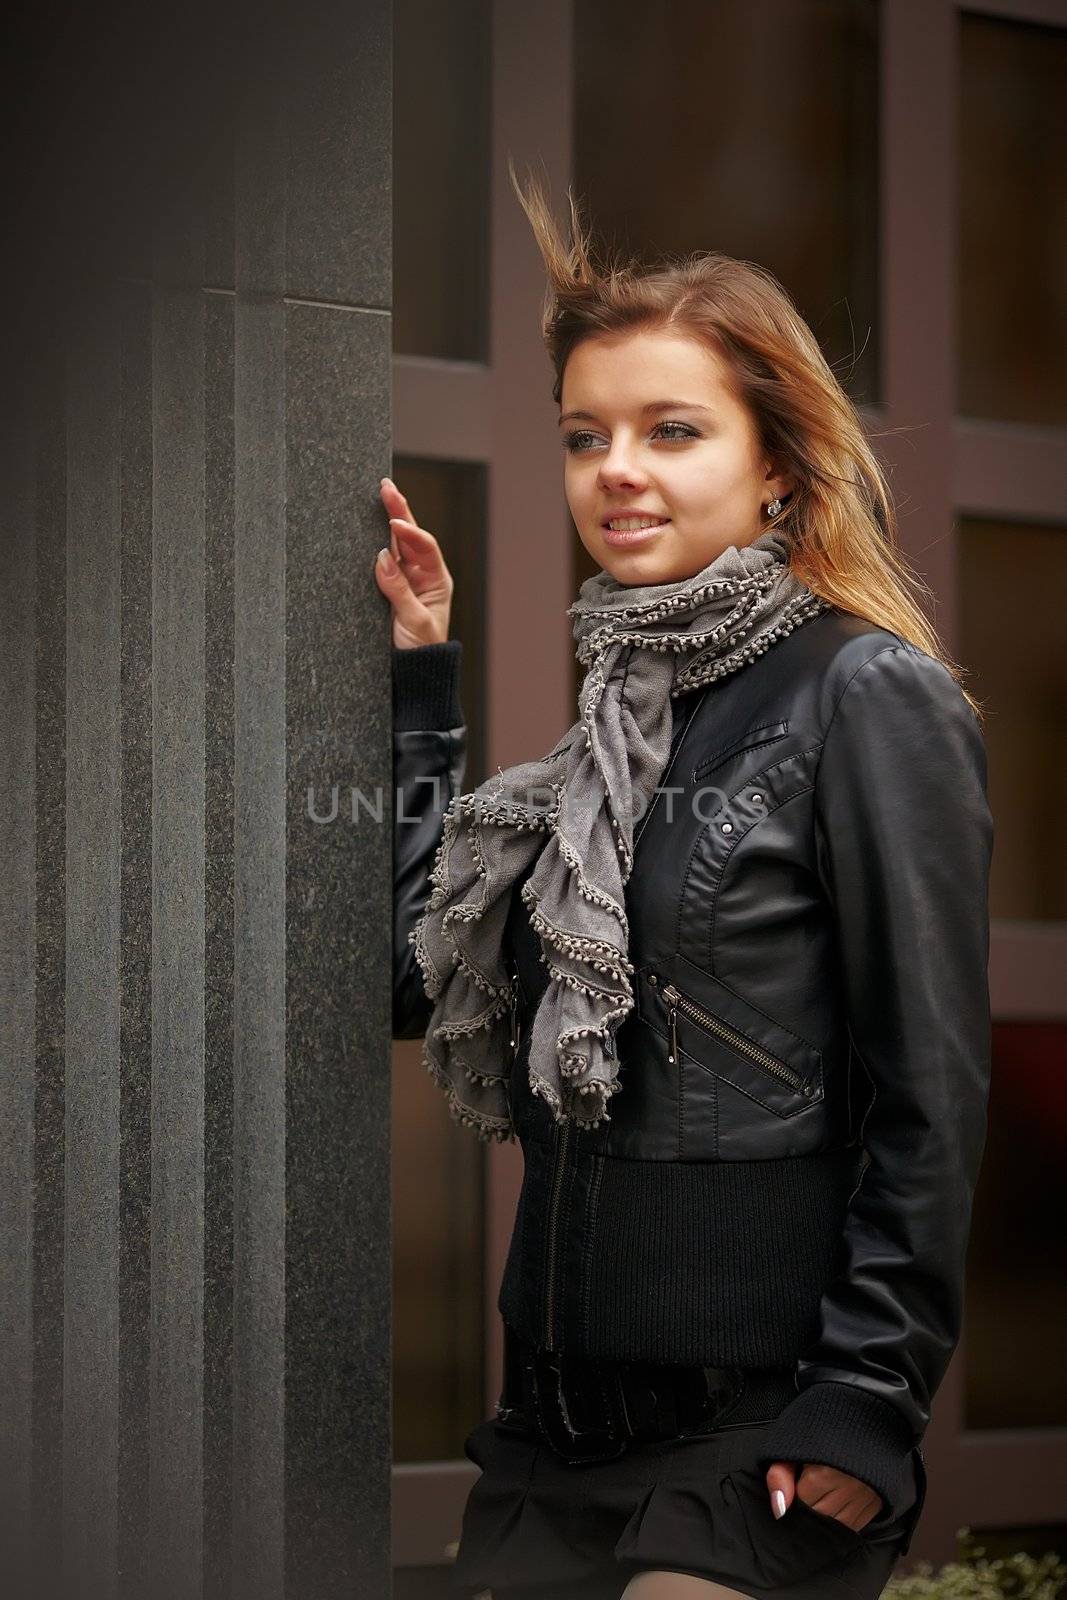 Beautiful girl in autumn coat standing near expensive granite facade. Wind waving her hair beautifully. girl smiling